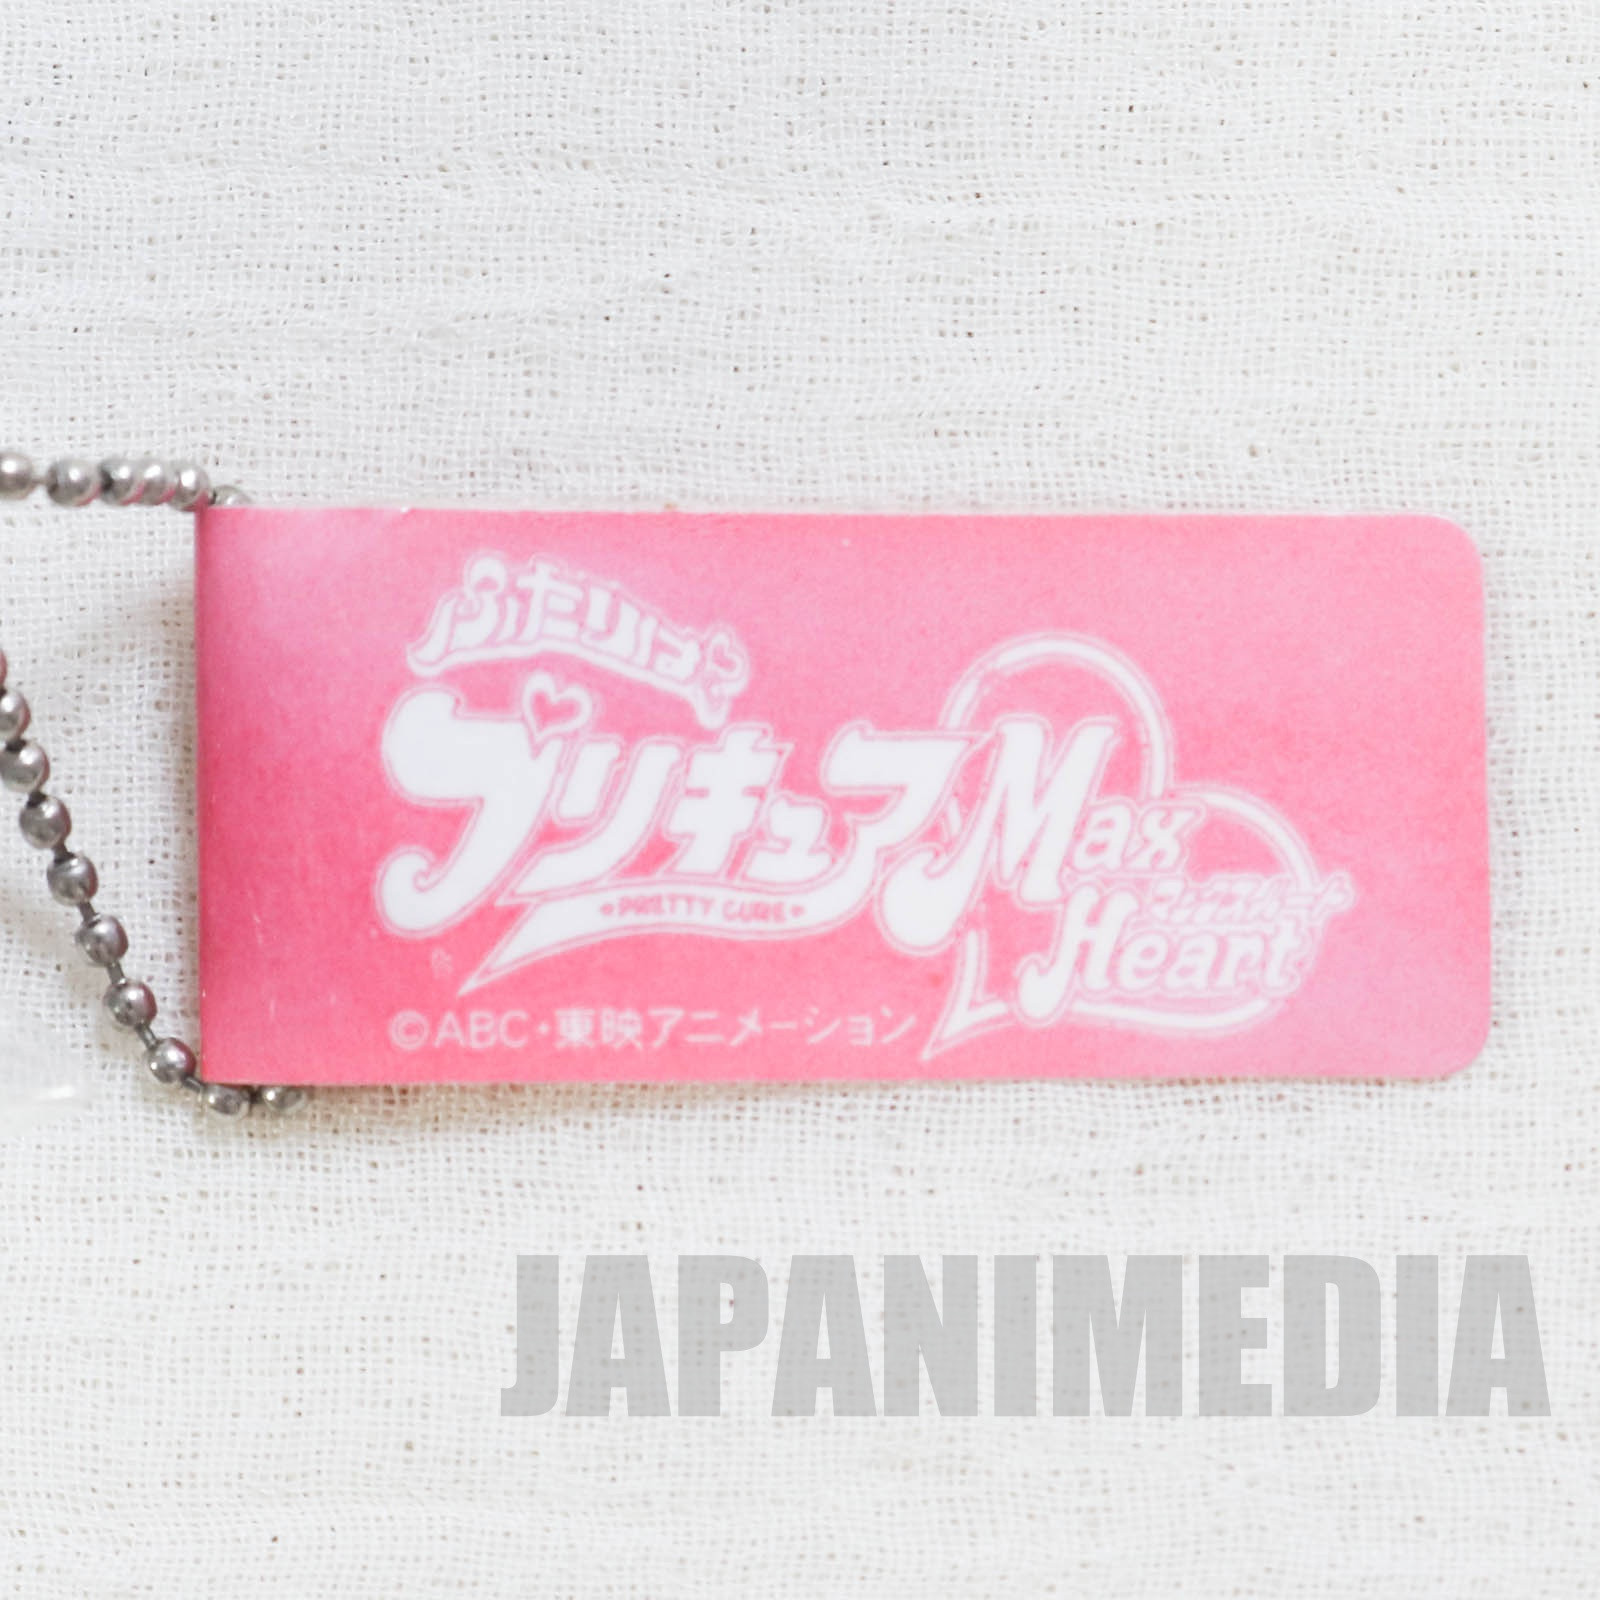 RARE!! Futari wa Pretty Cure Max Heart Cure Brack & Mepple Micro Can Ball keychain 2pc set JAPAN